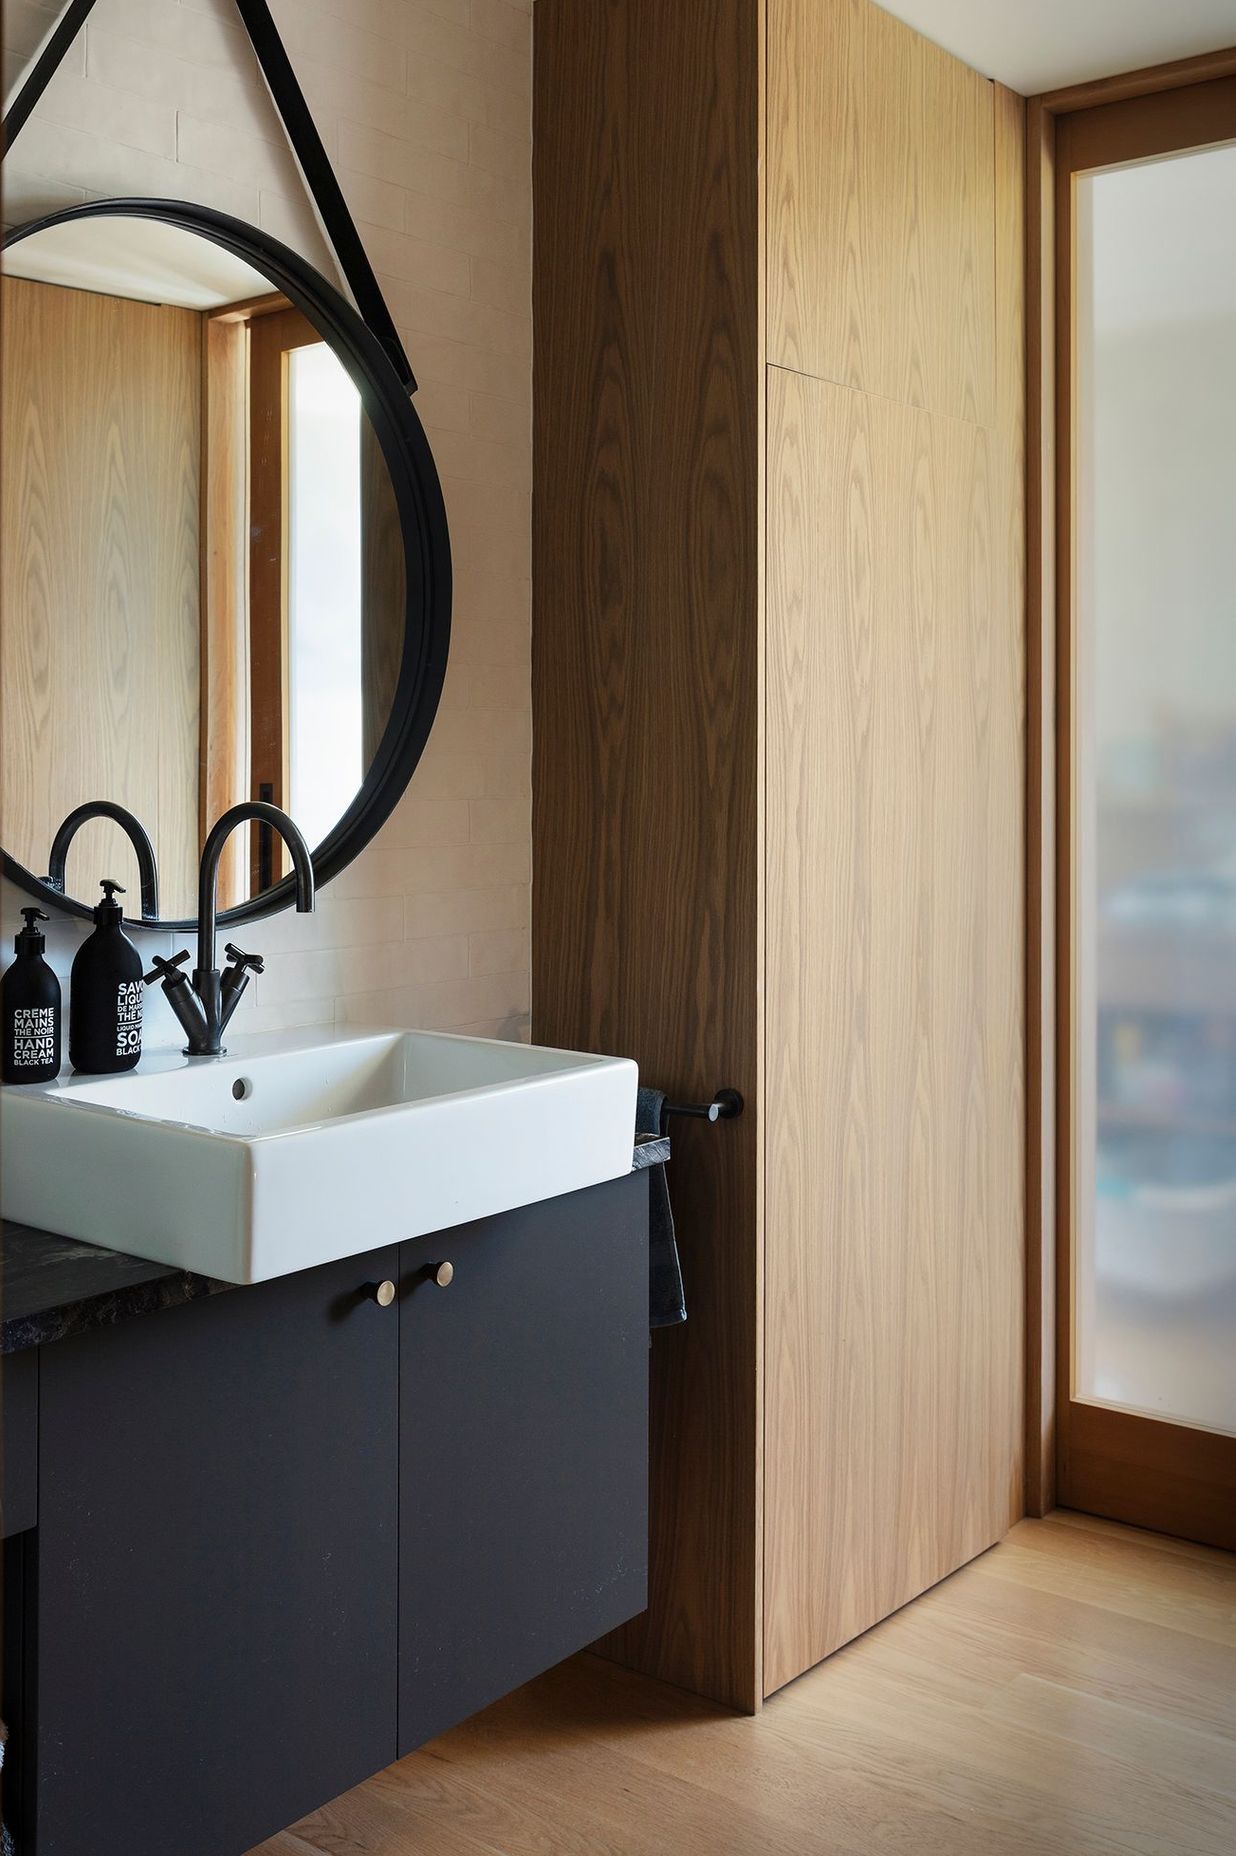 This elegant bathroom in monochromatic tones with timber.